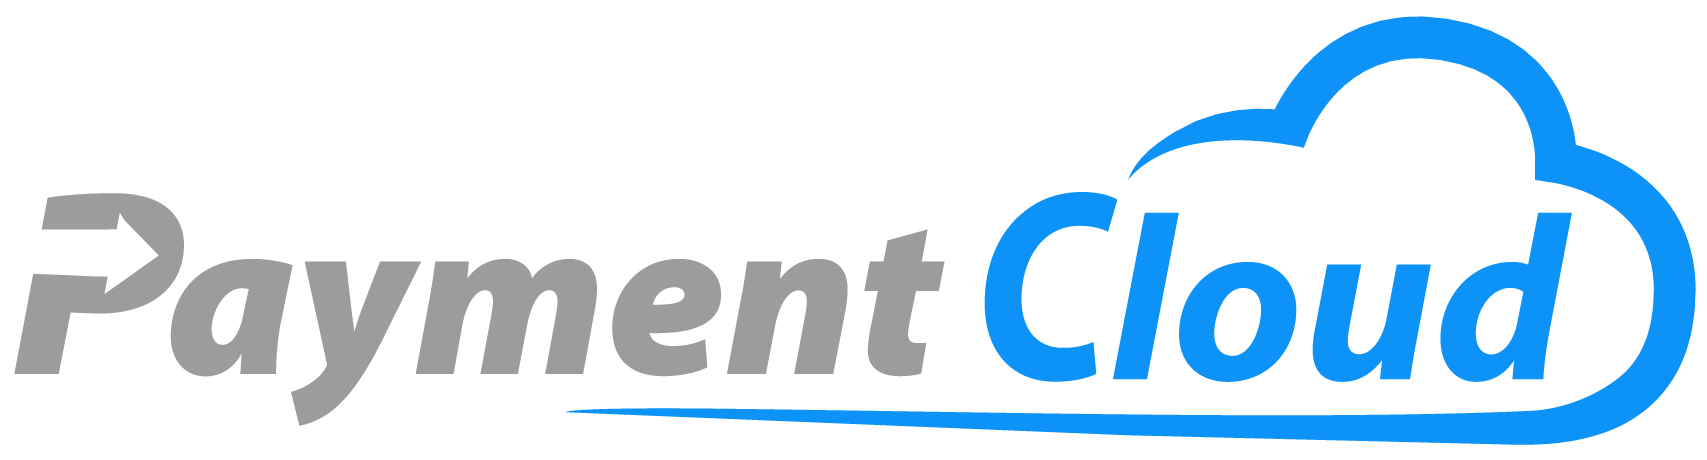 Payment Cloud logo